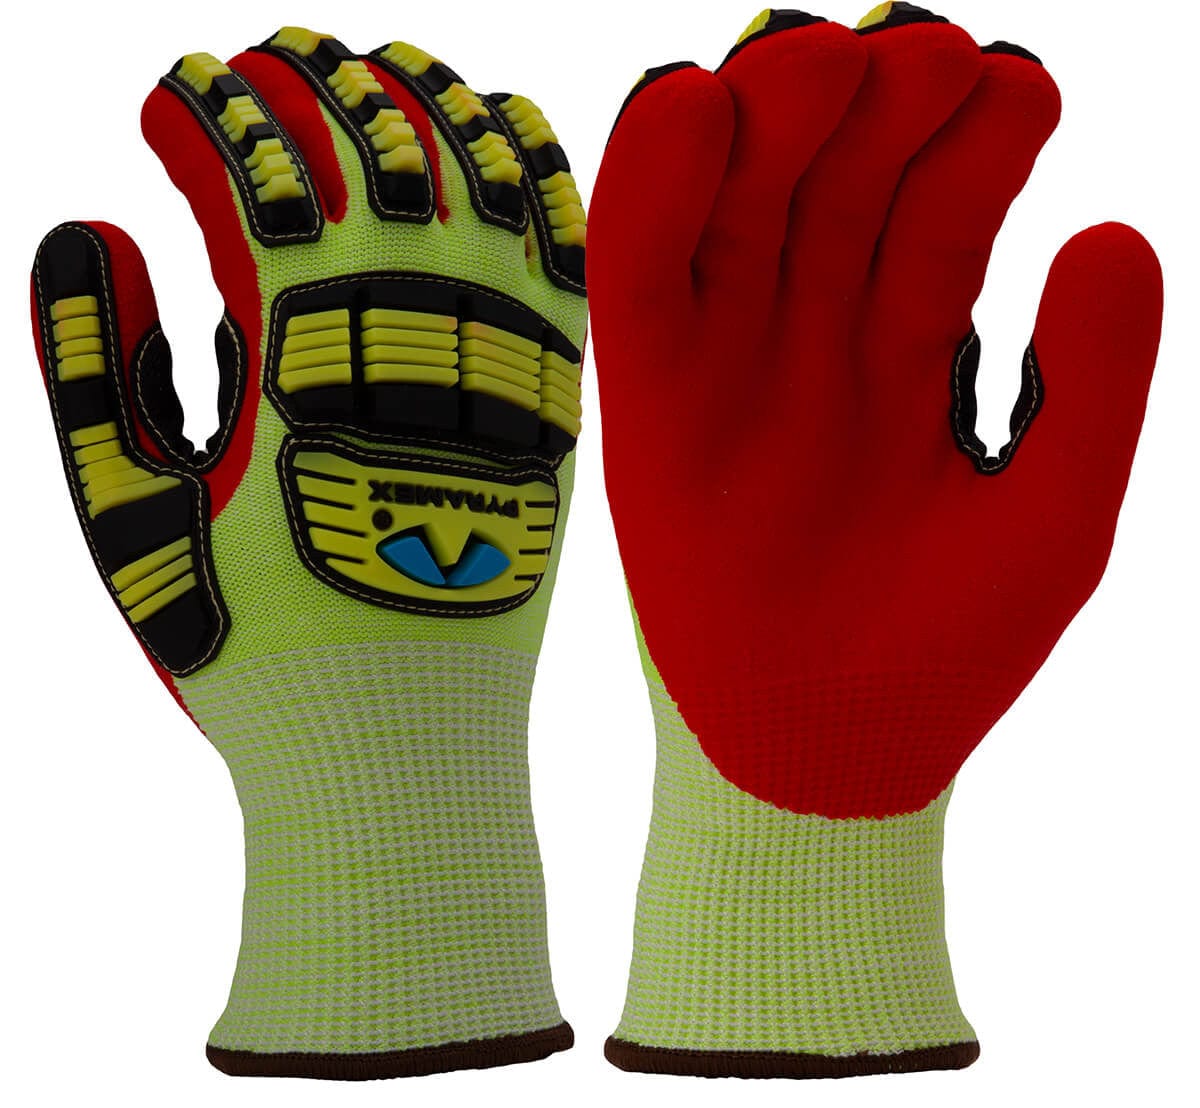 Pyramex GL612C Winter Cut-Resistant Gloves